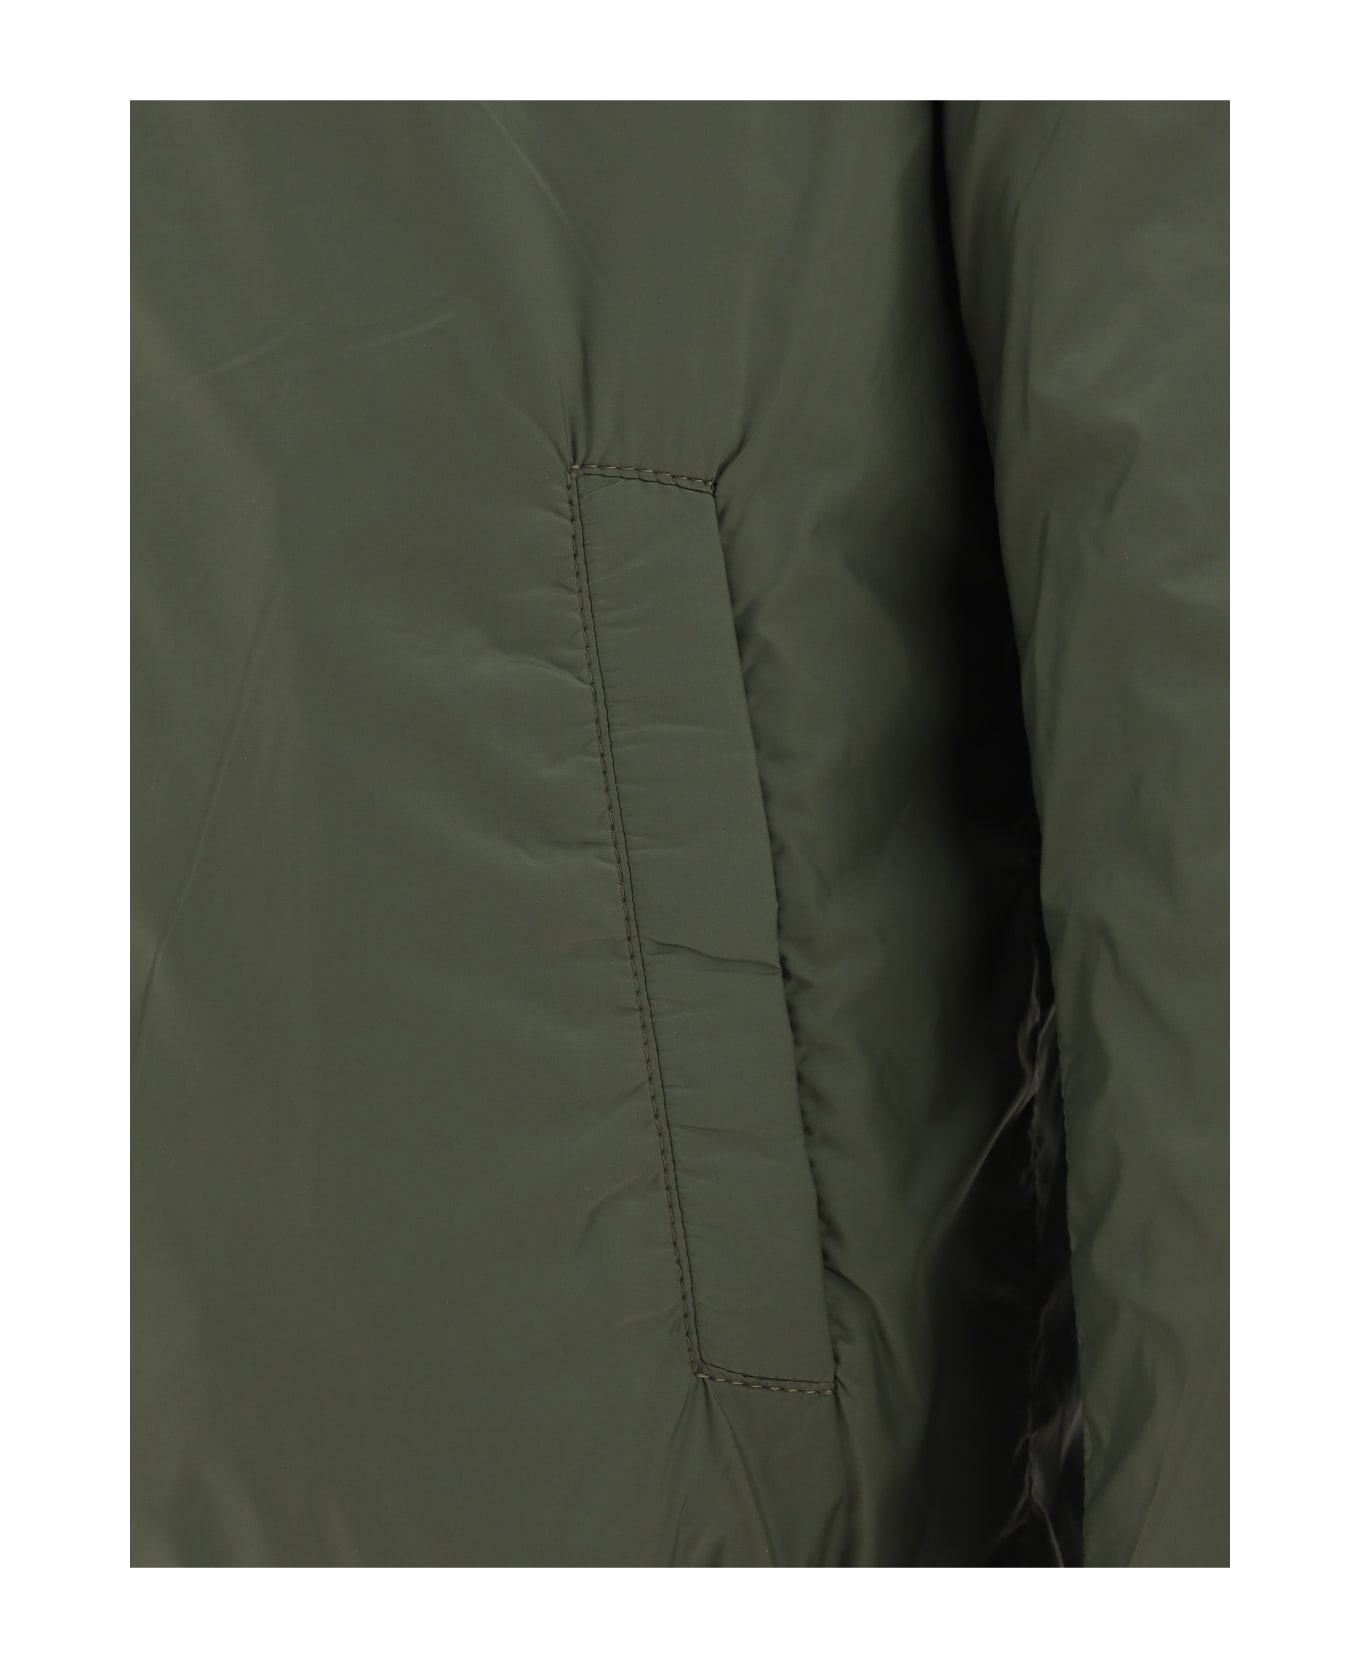 D'Amico Leather Dominic Reversible Jacket - Drum Dyed+nylon+nylon Nero/militare ジャケット